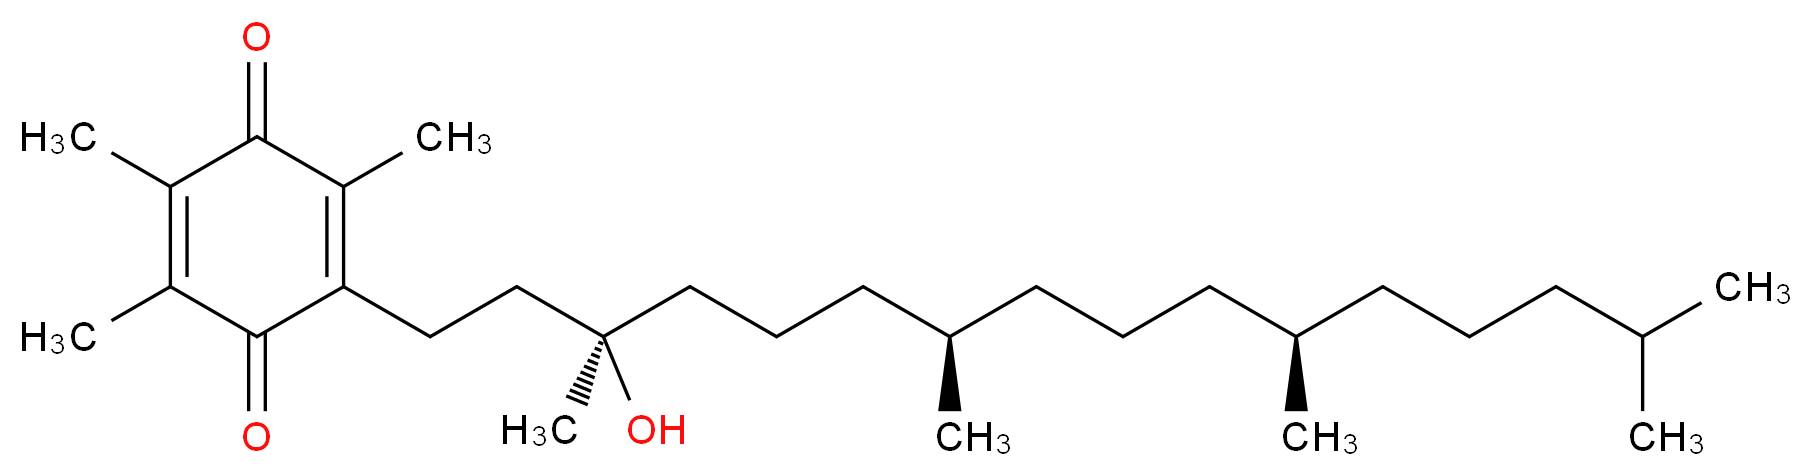 alpha-Tocopherolquinone_Molecular_structure_CAS_7559-04-8)